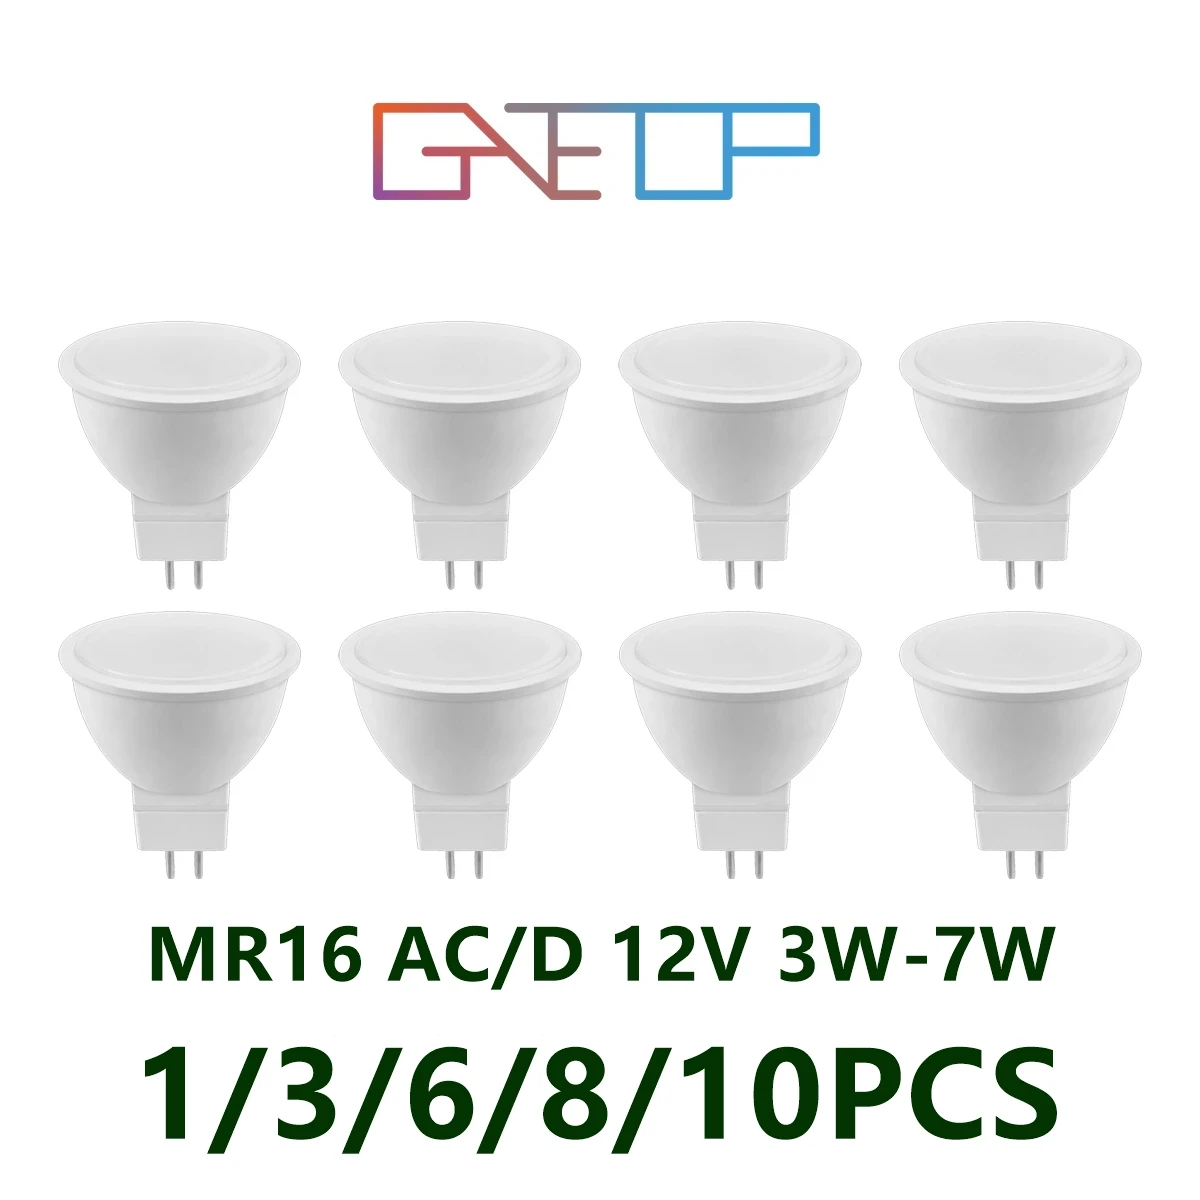 LED spot lamp MR16 GU5.3 AC DC12V 3W-7W Warm White Day Light LED Light Lamp For Home Decoration Replace 50W Halogen Spotlight